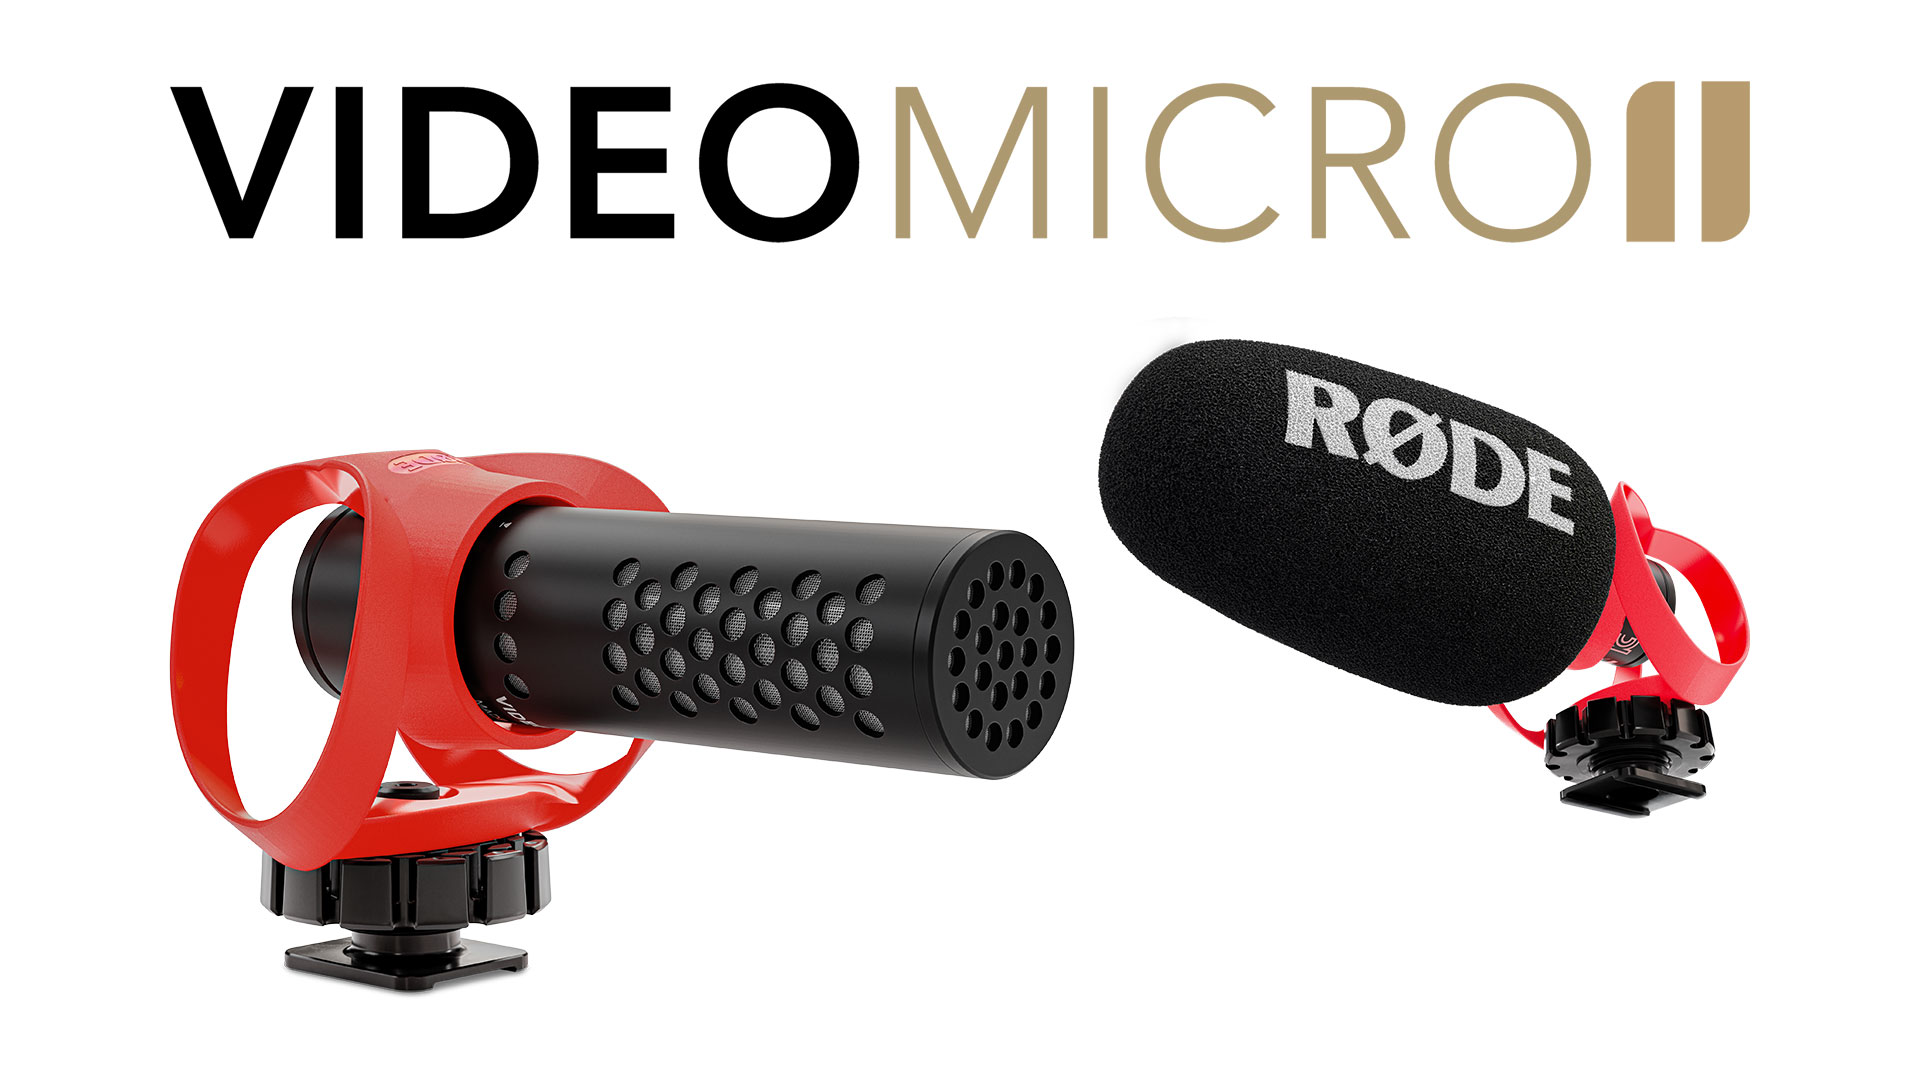 Rode VideoMic GO II vs VideoMicro - Which One Should You Buy? 